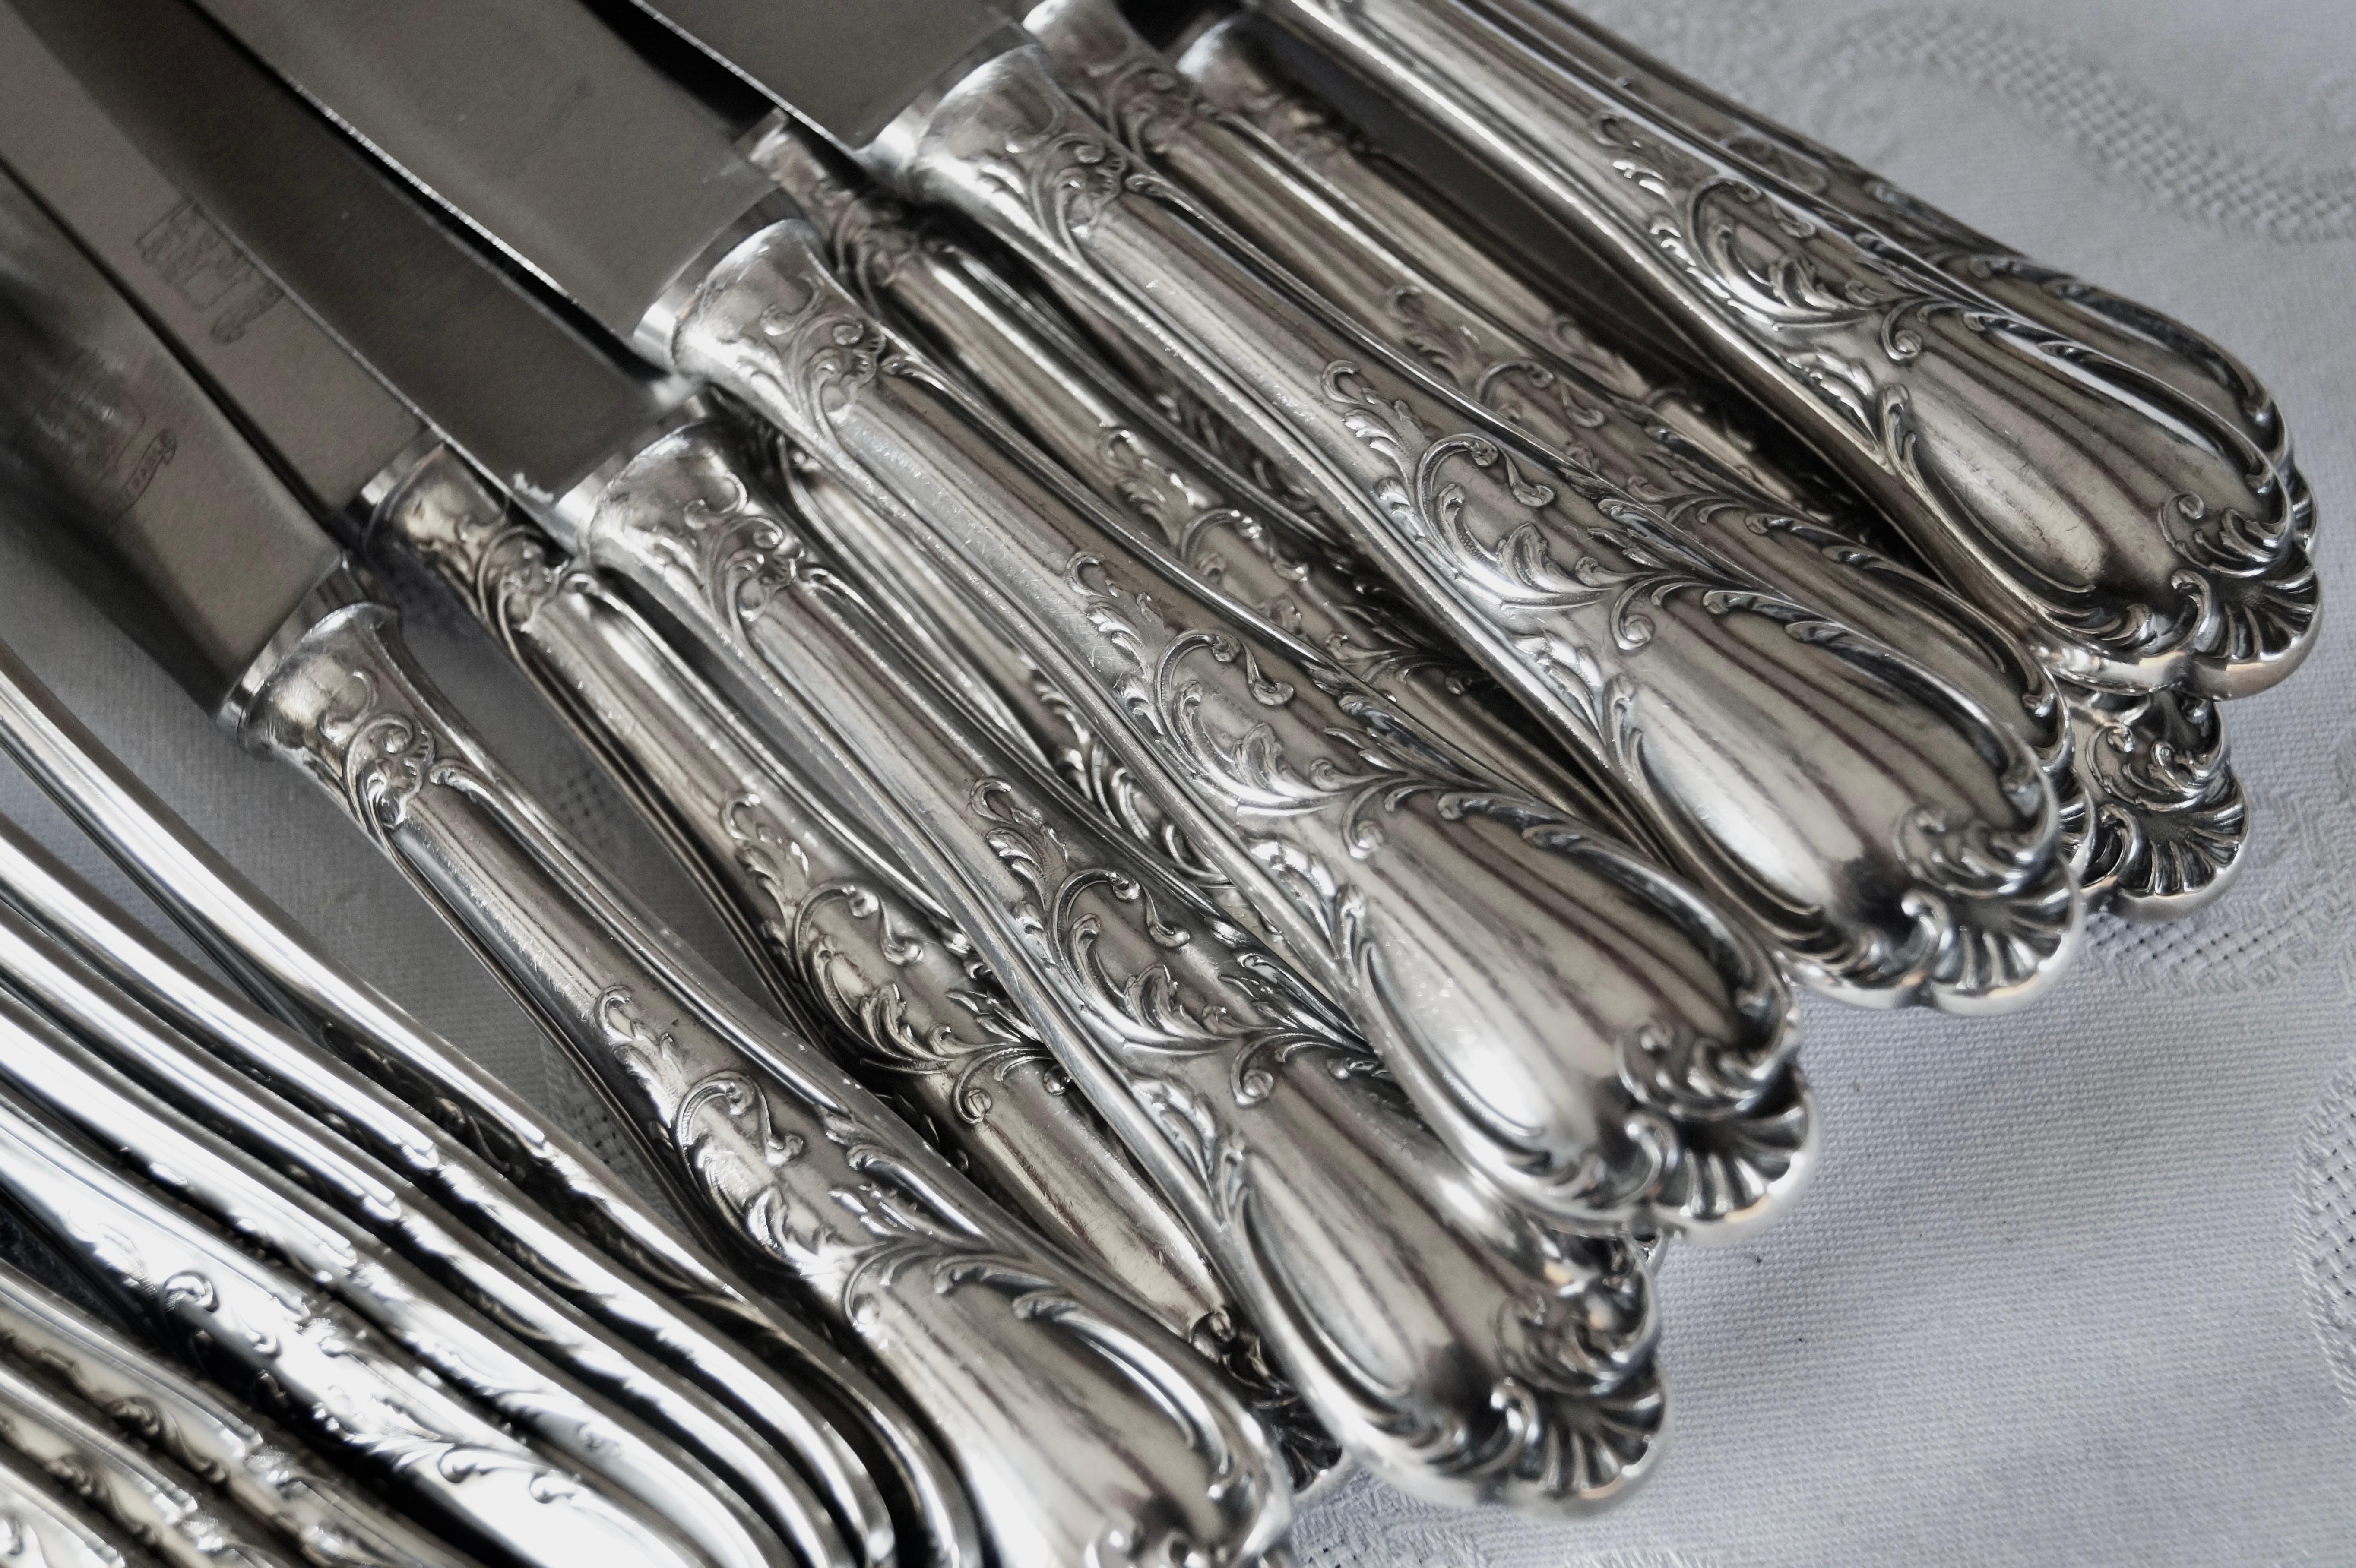 Silvered Antique Silver Plated WISKEMANN Cutlery Flatware set 